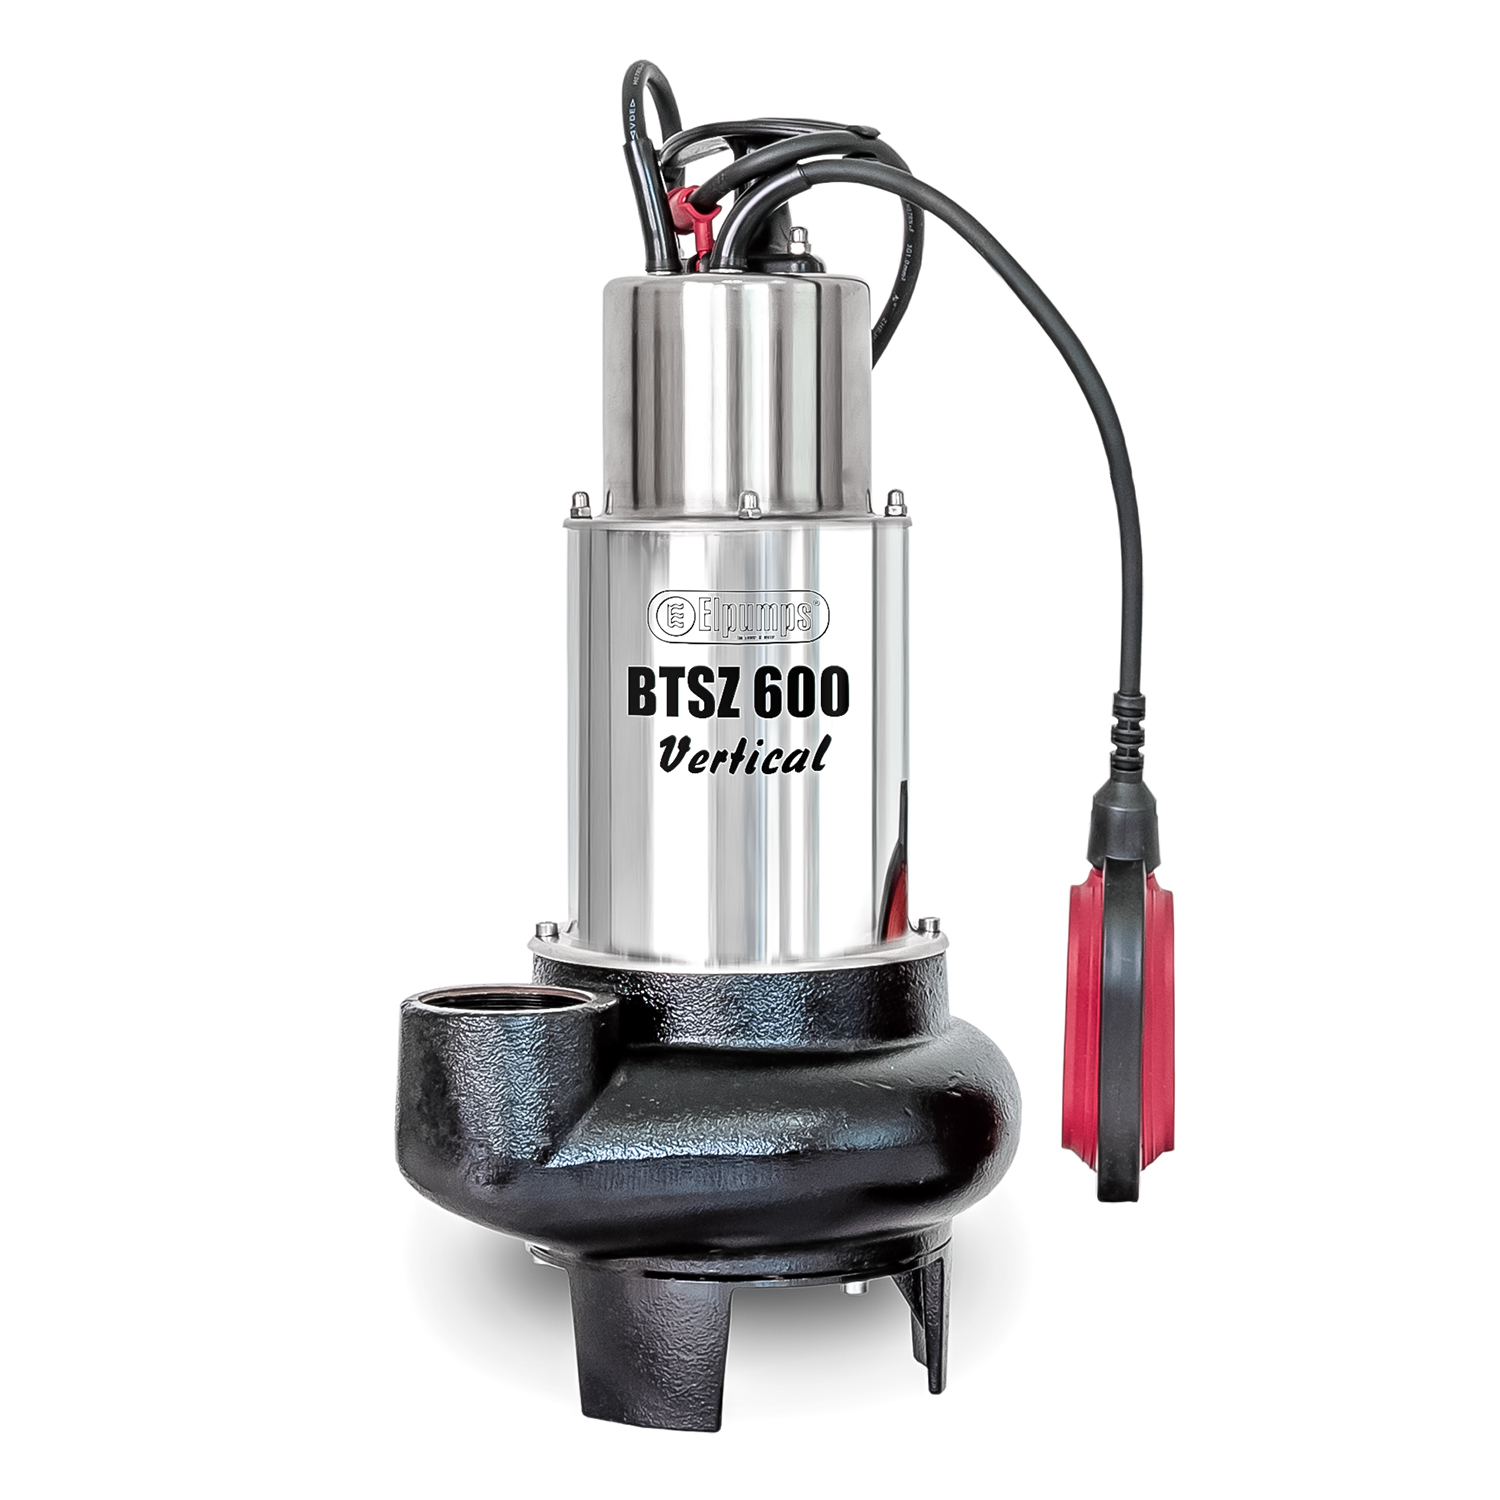 BTSZ 600 VERTICAL Free-flow (Vortex) submersible pumps for sewage